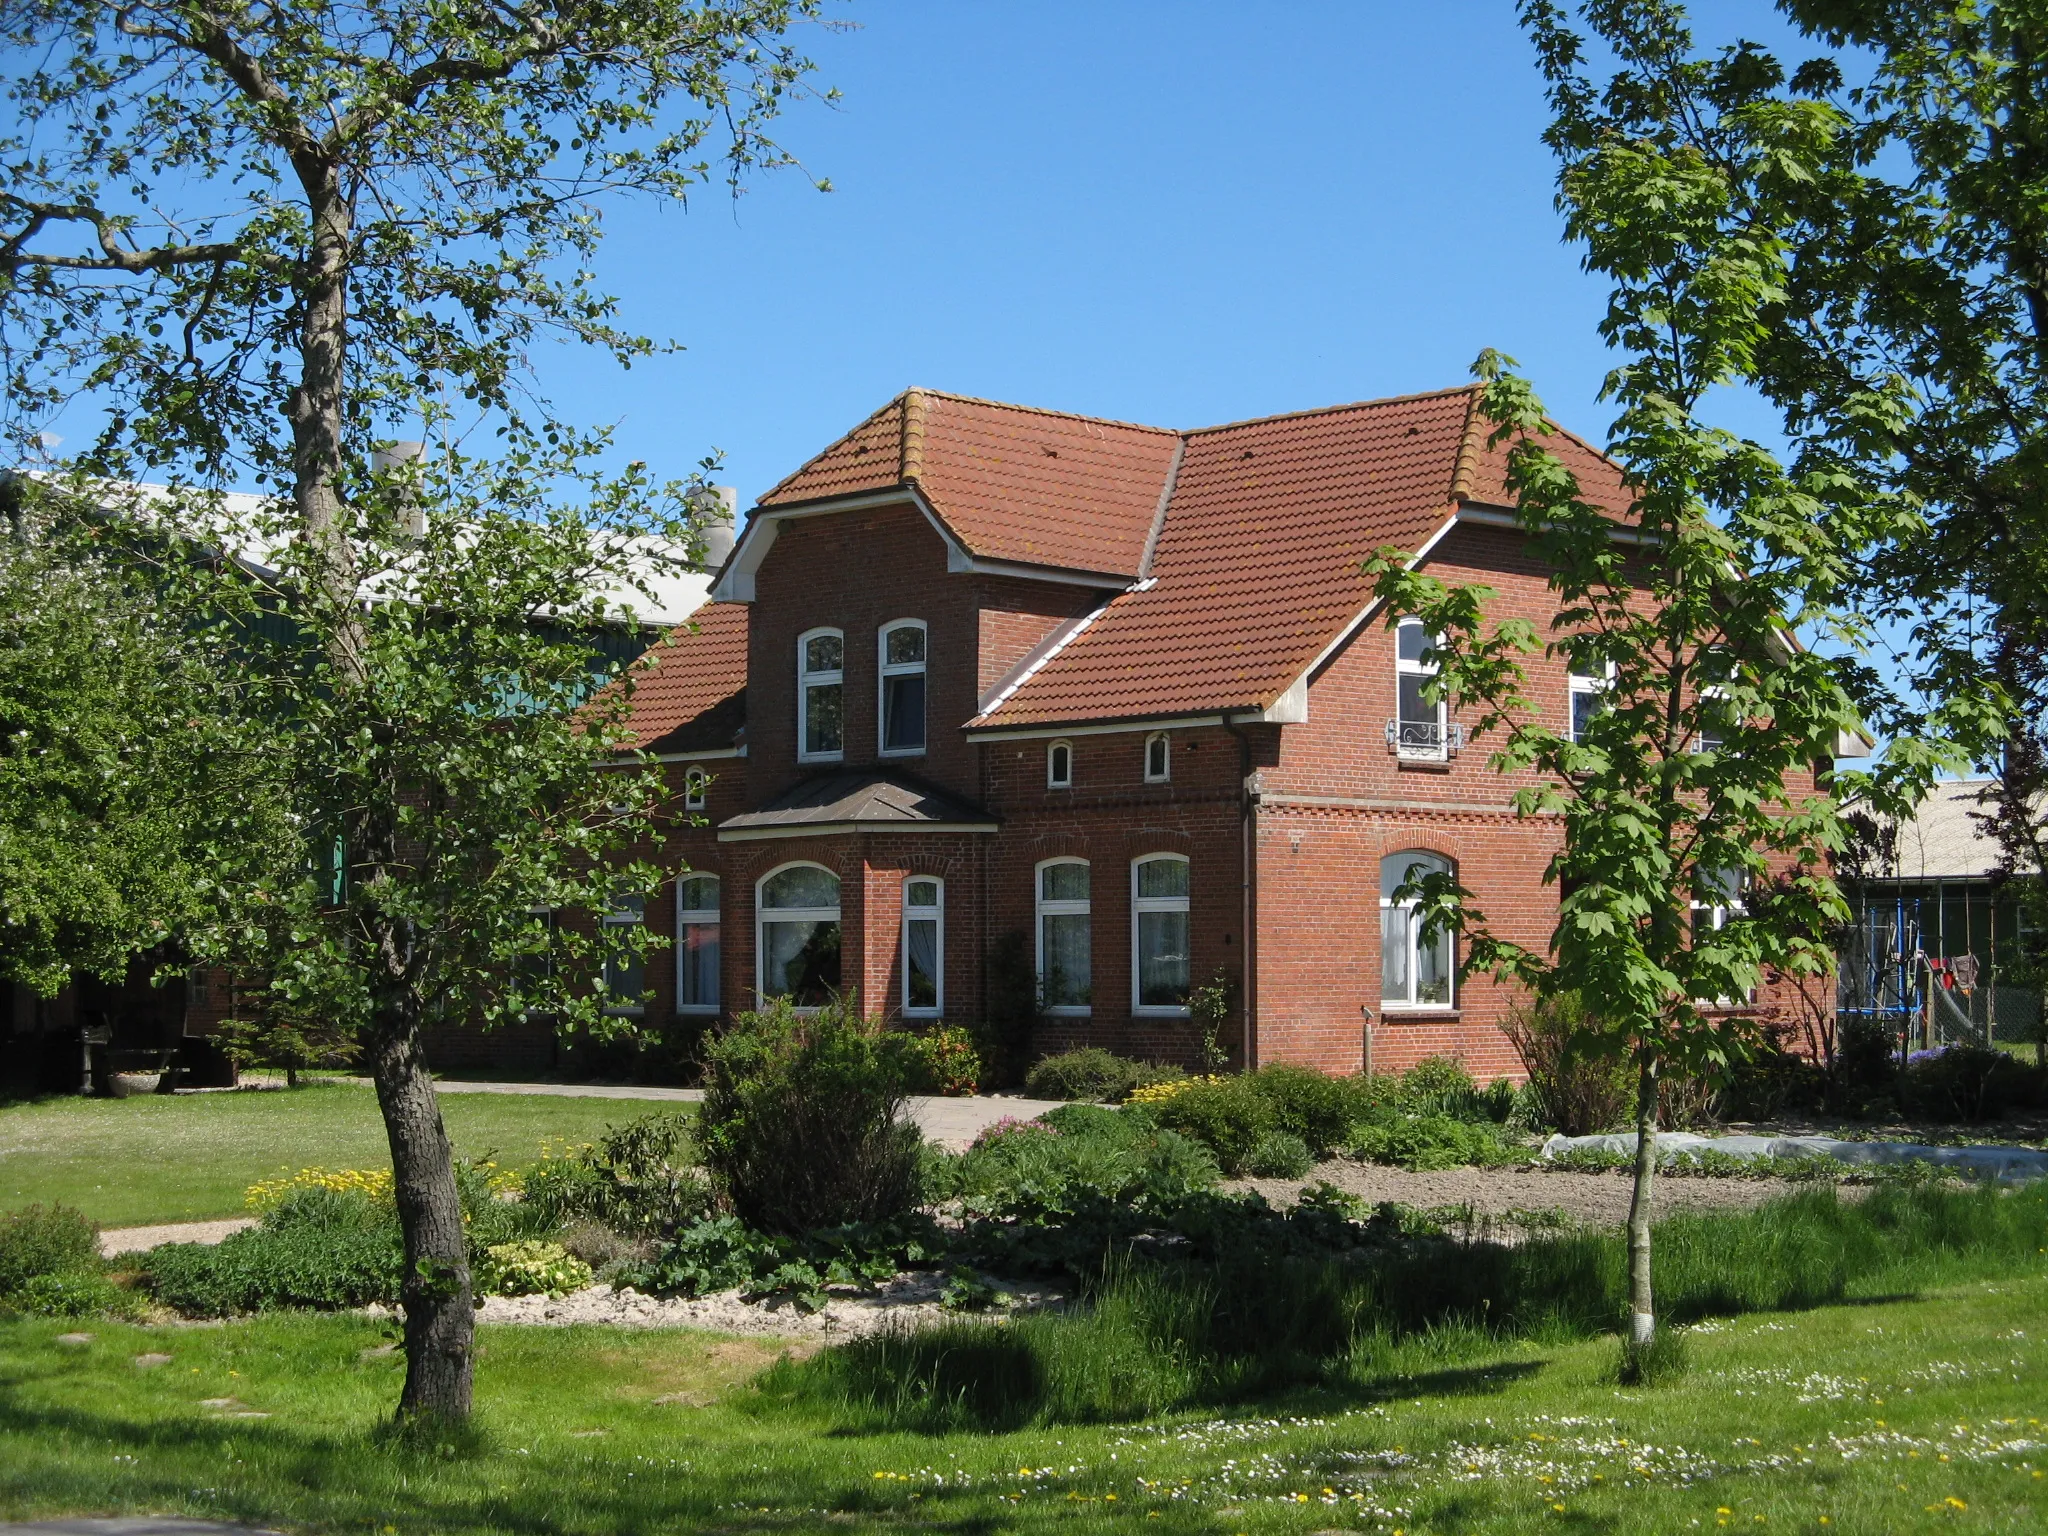 Photo showing: House in Flederwurth, Groven

Author: Dirk Ingo Franke